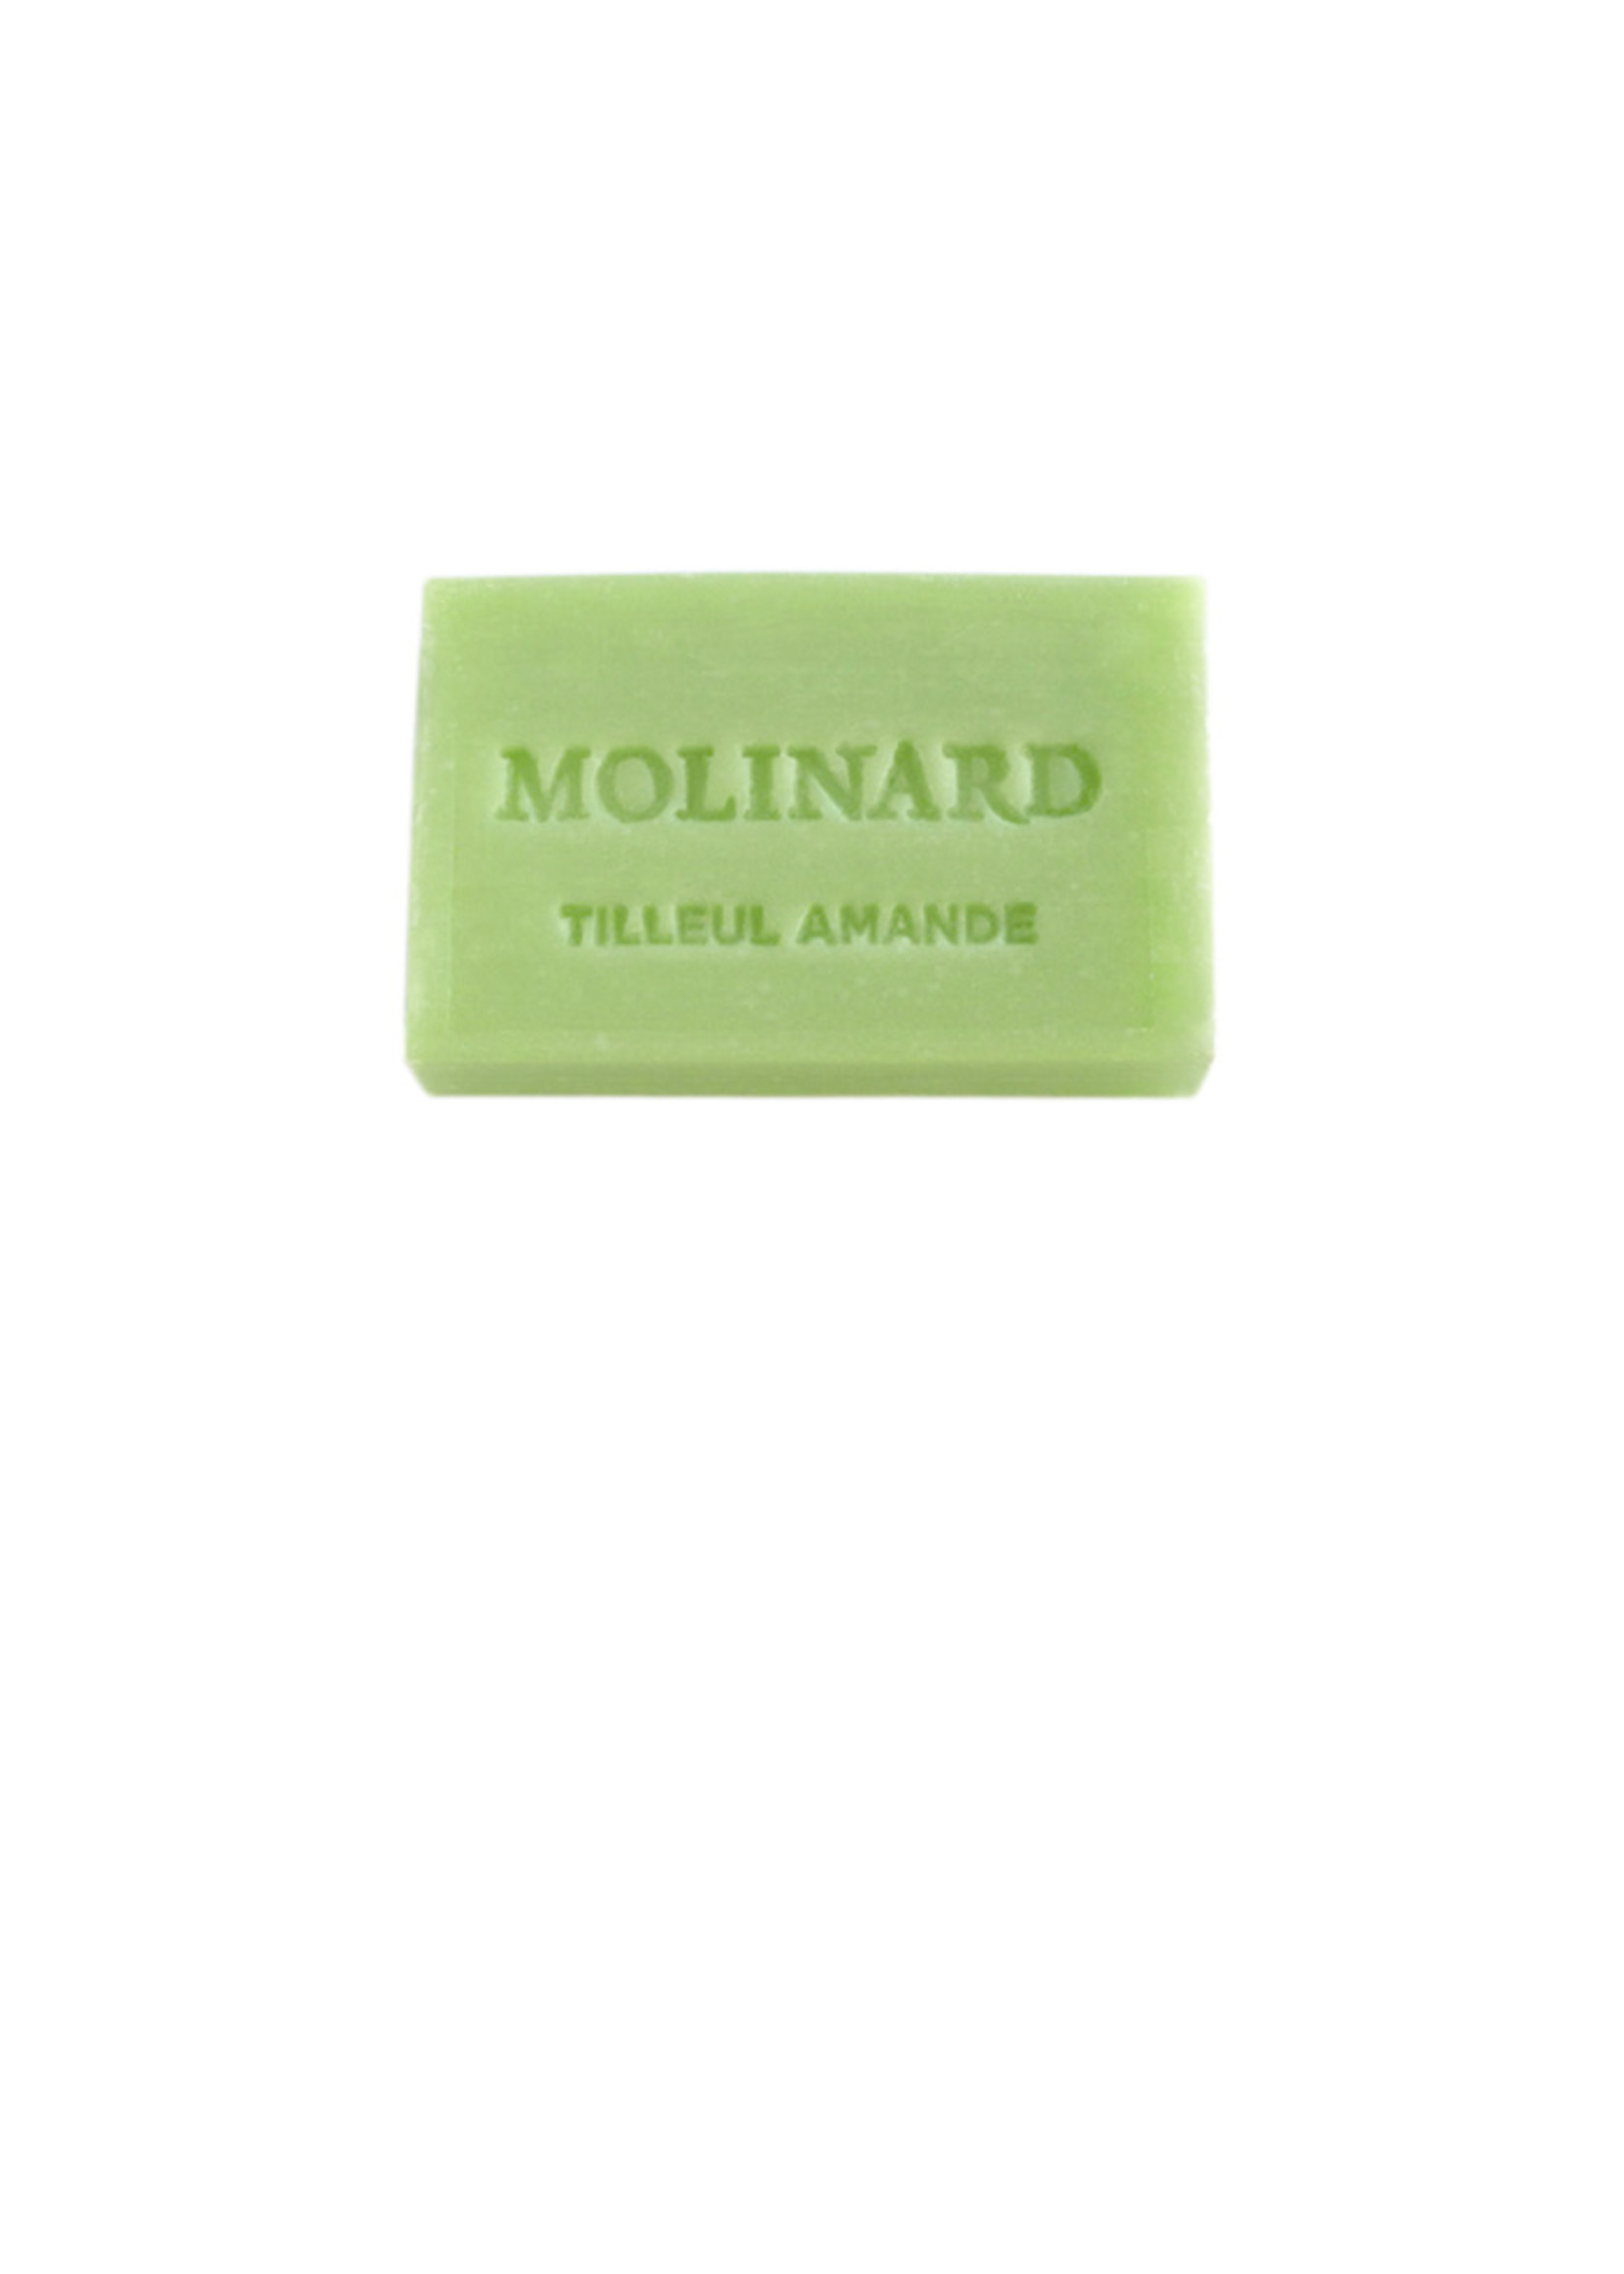 Molinard Tilleul Amande Soap - Les Savons Artisanaux de Molinard